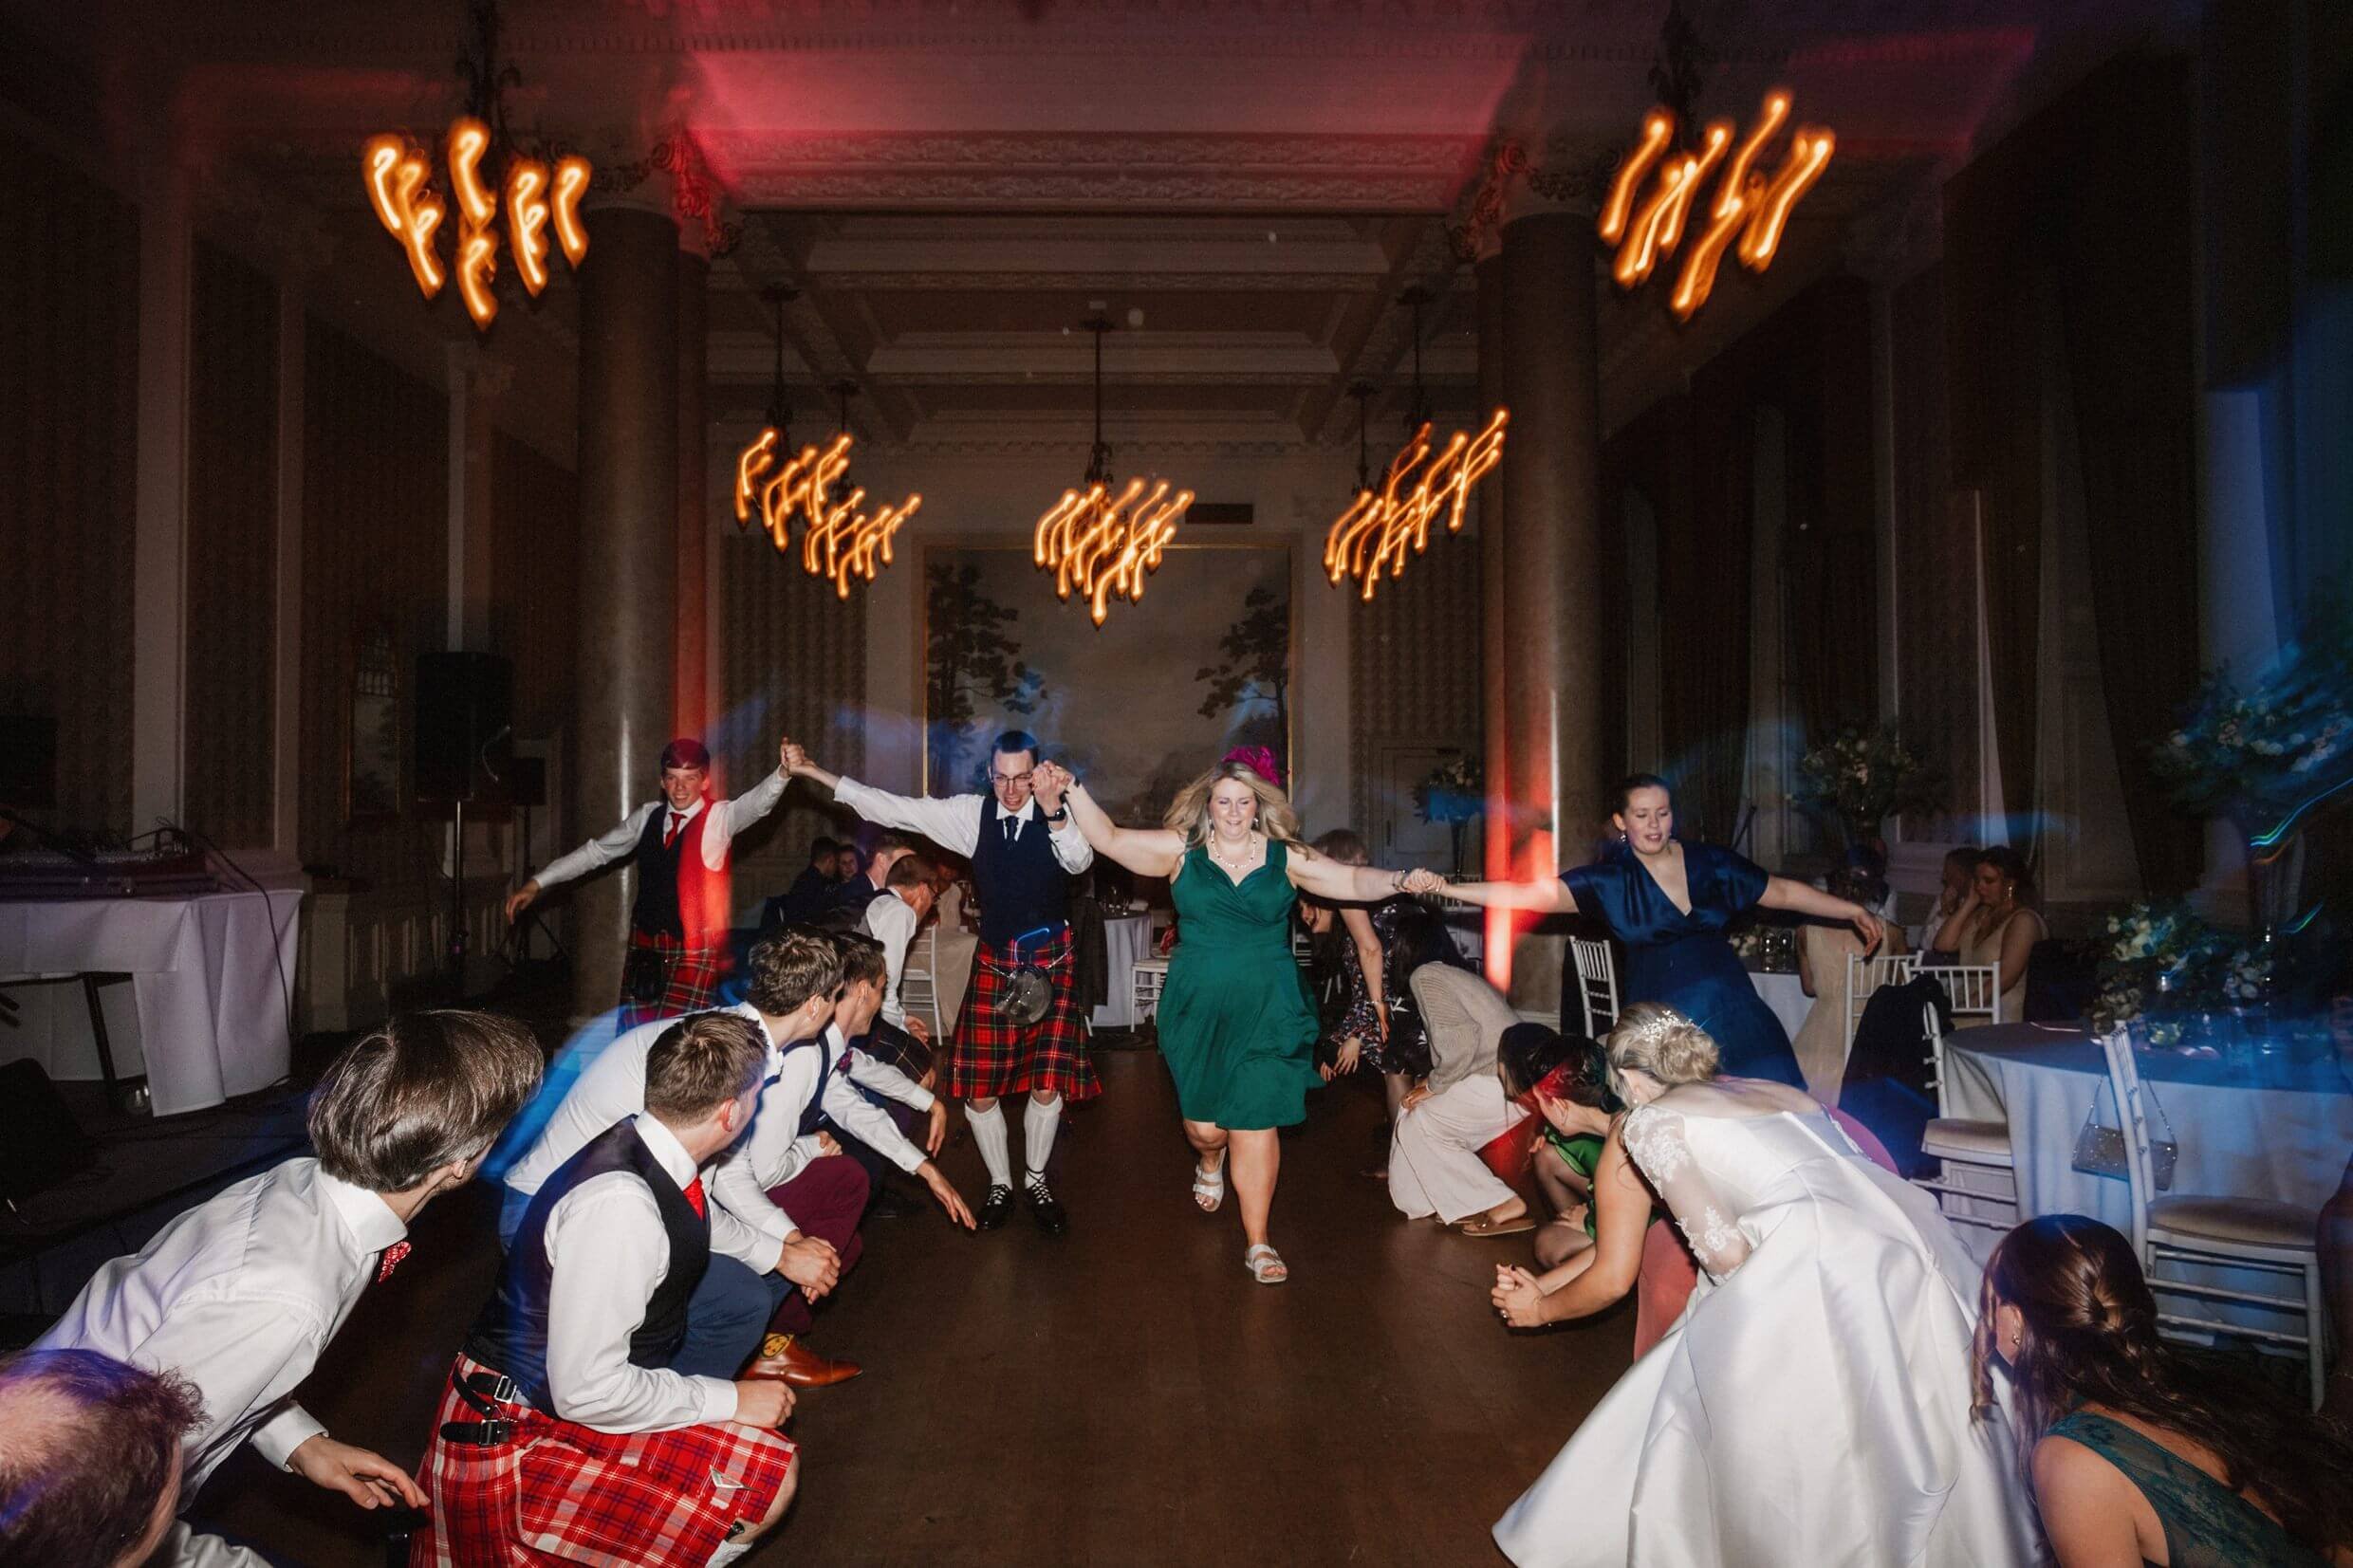 the wedding party ceilidh dancing beneath chandeliers at the balmoral hotel edinburgh wedding venue in scotland